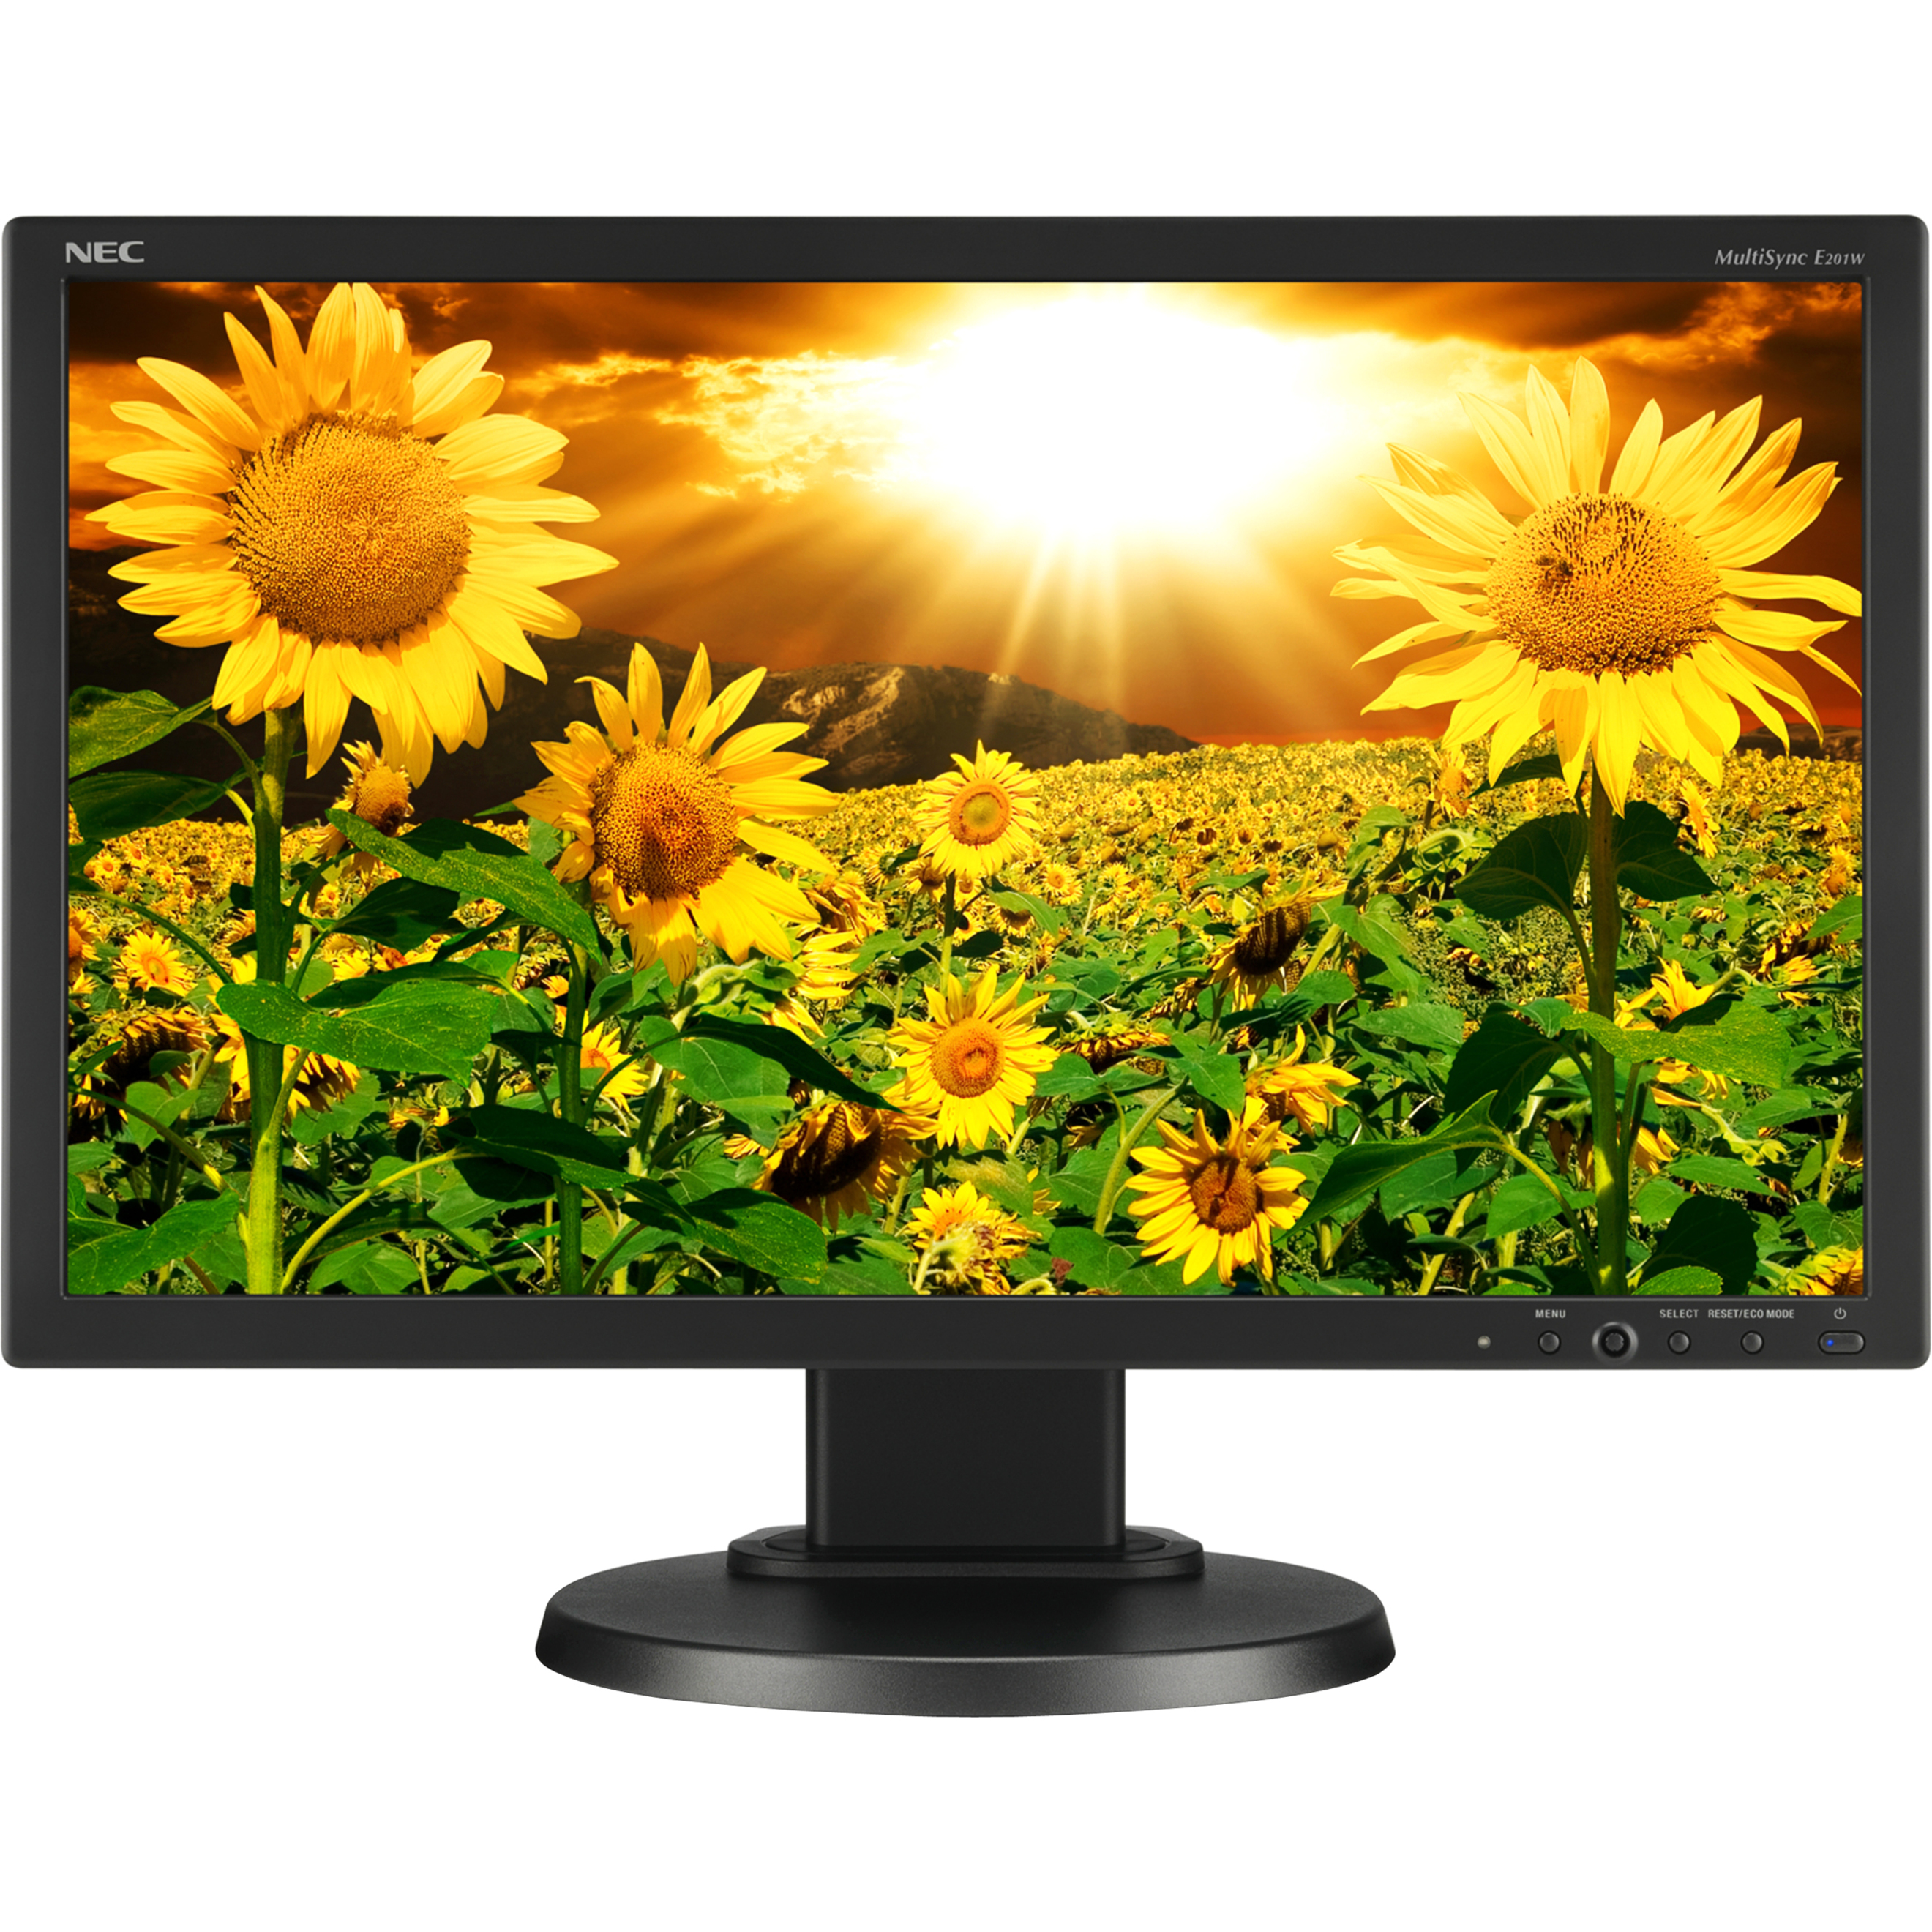 NEC Display MultiSync E201W 20" Class LCD Monitor, 16:9 - image 1 of 4